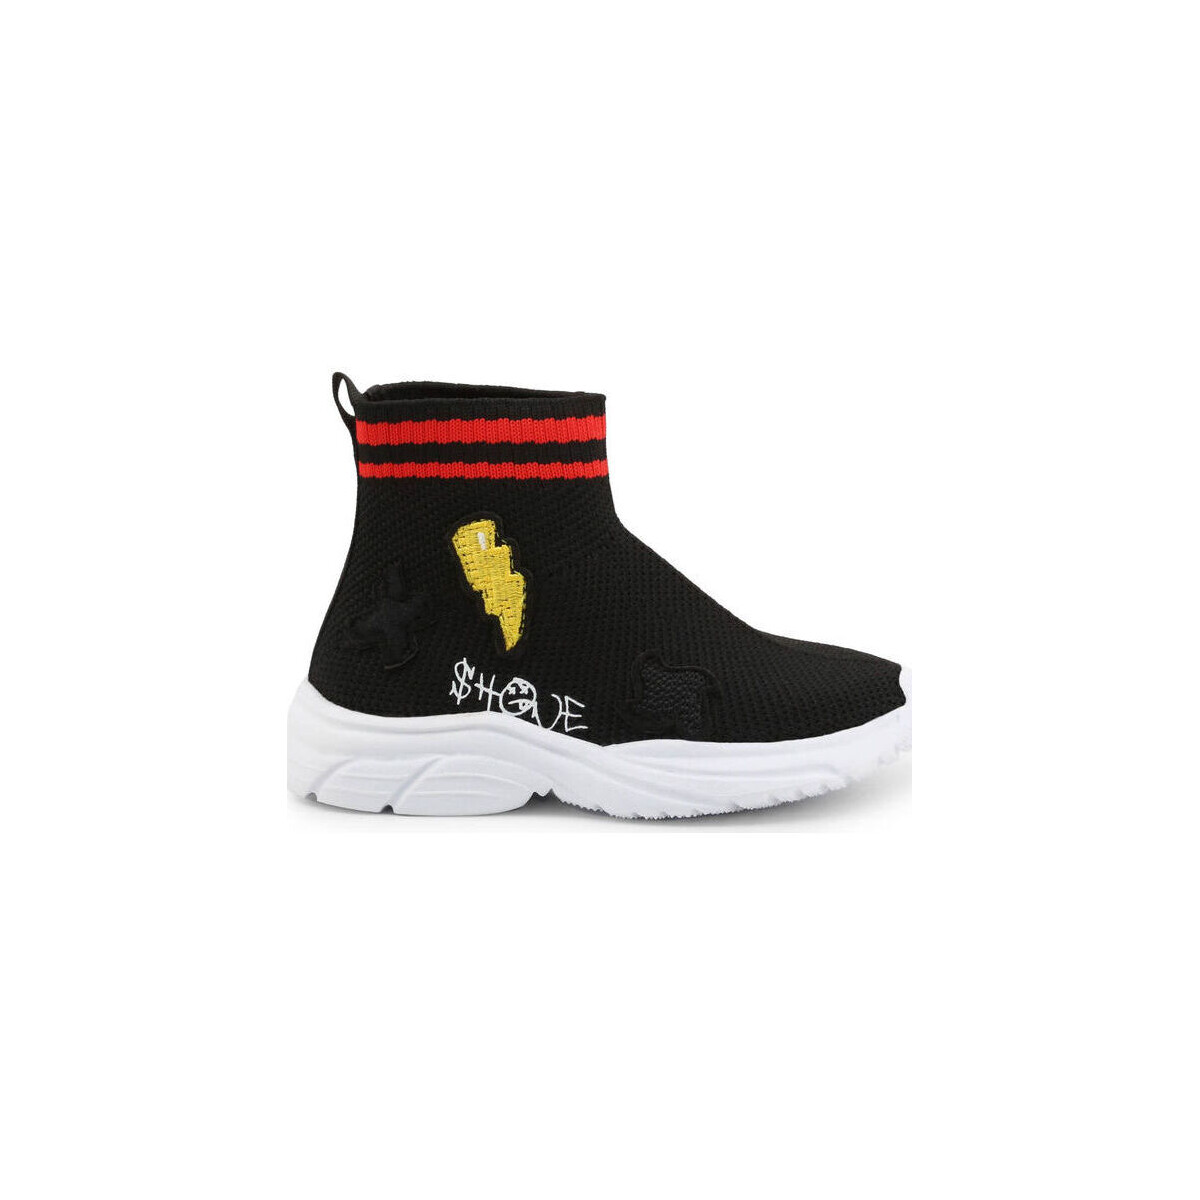 Shone  Sneakers Shone 1601-005 Black/Red